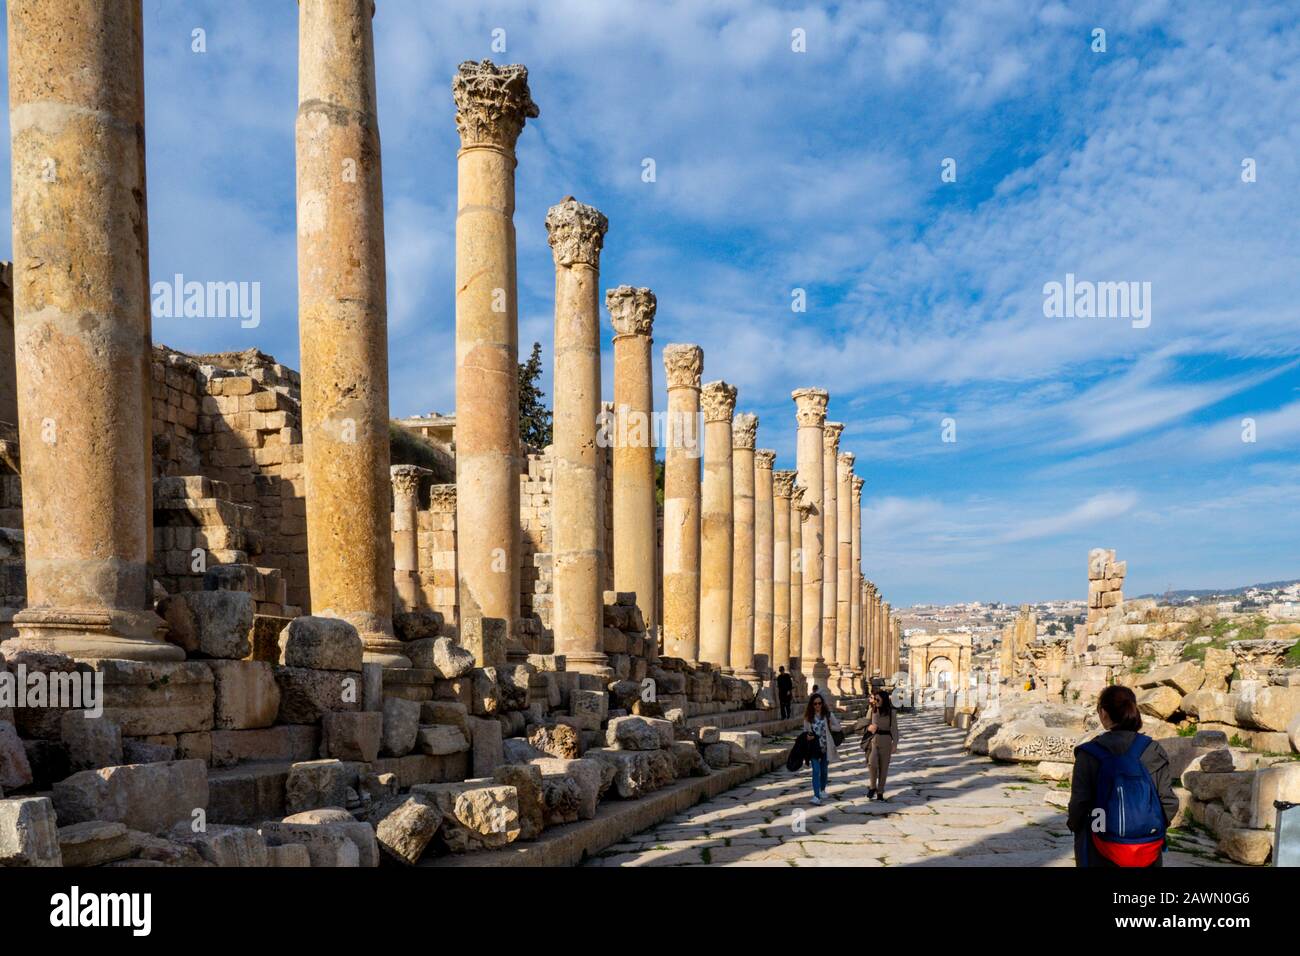 Colonnaded street in the ancient Roman city of Jerash Jerash, Jordan January, 27, 2020 Stock Photo